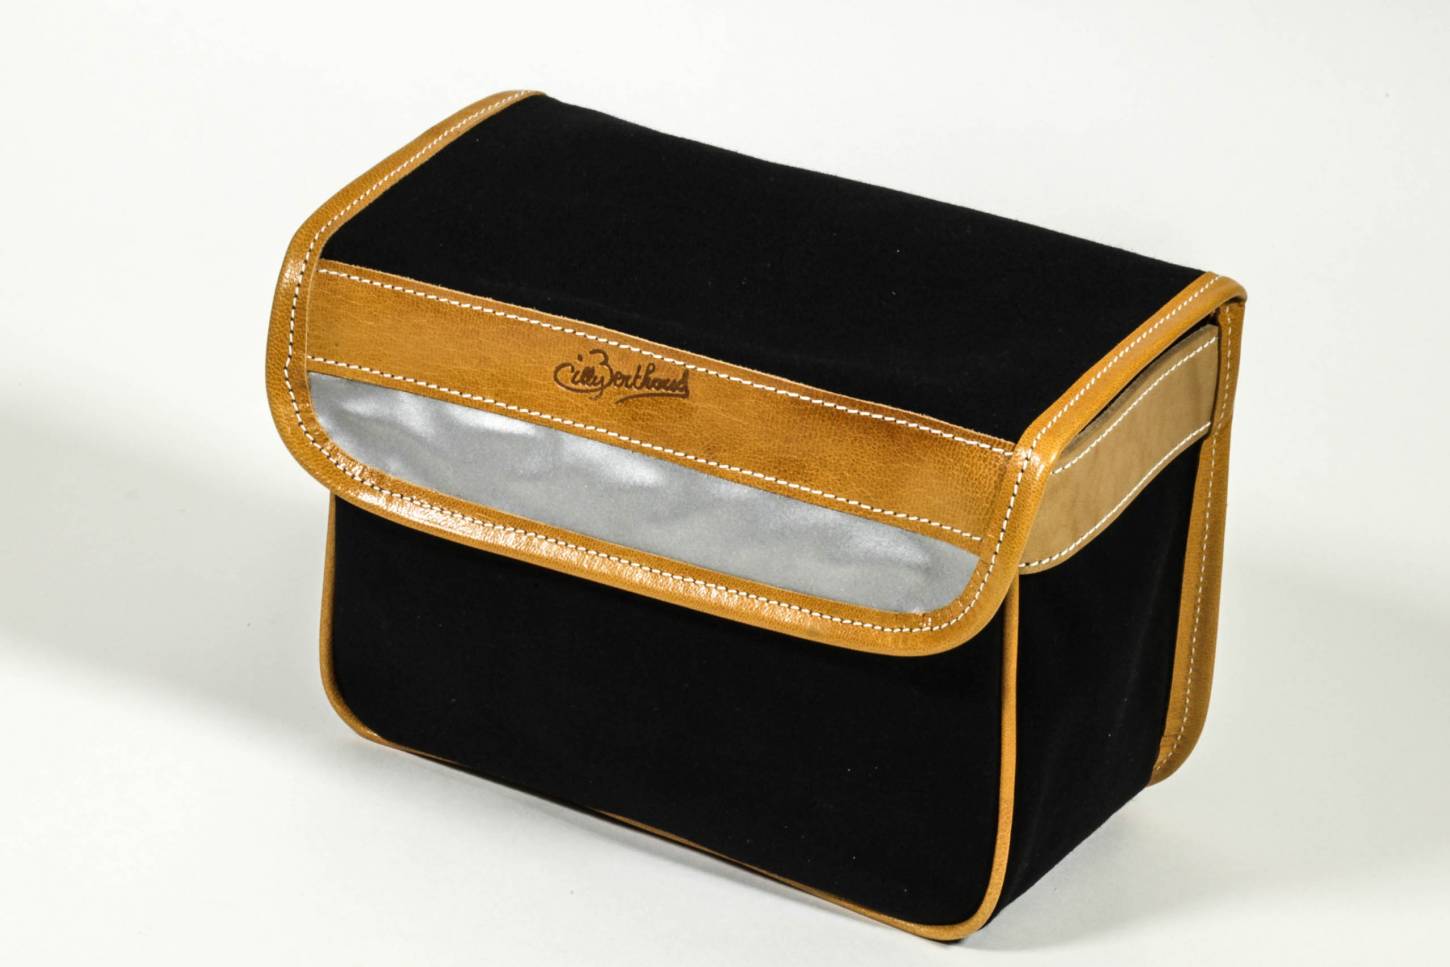 Gilles Berthoud 200KF borsa manubrio borsa manubrio borsa manubrio nero + grigio anteriore Borsa manubrio "c'è :)